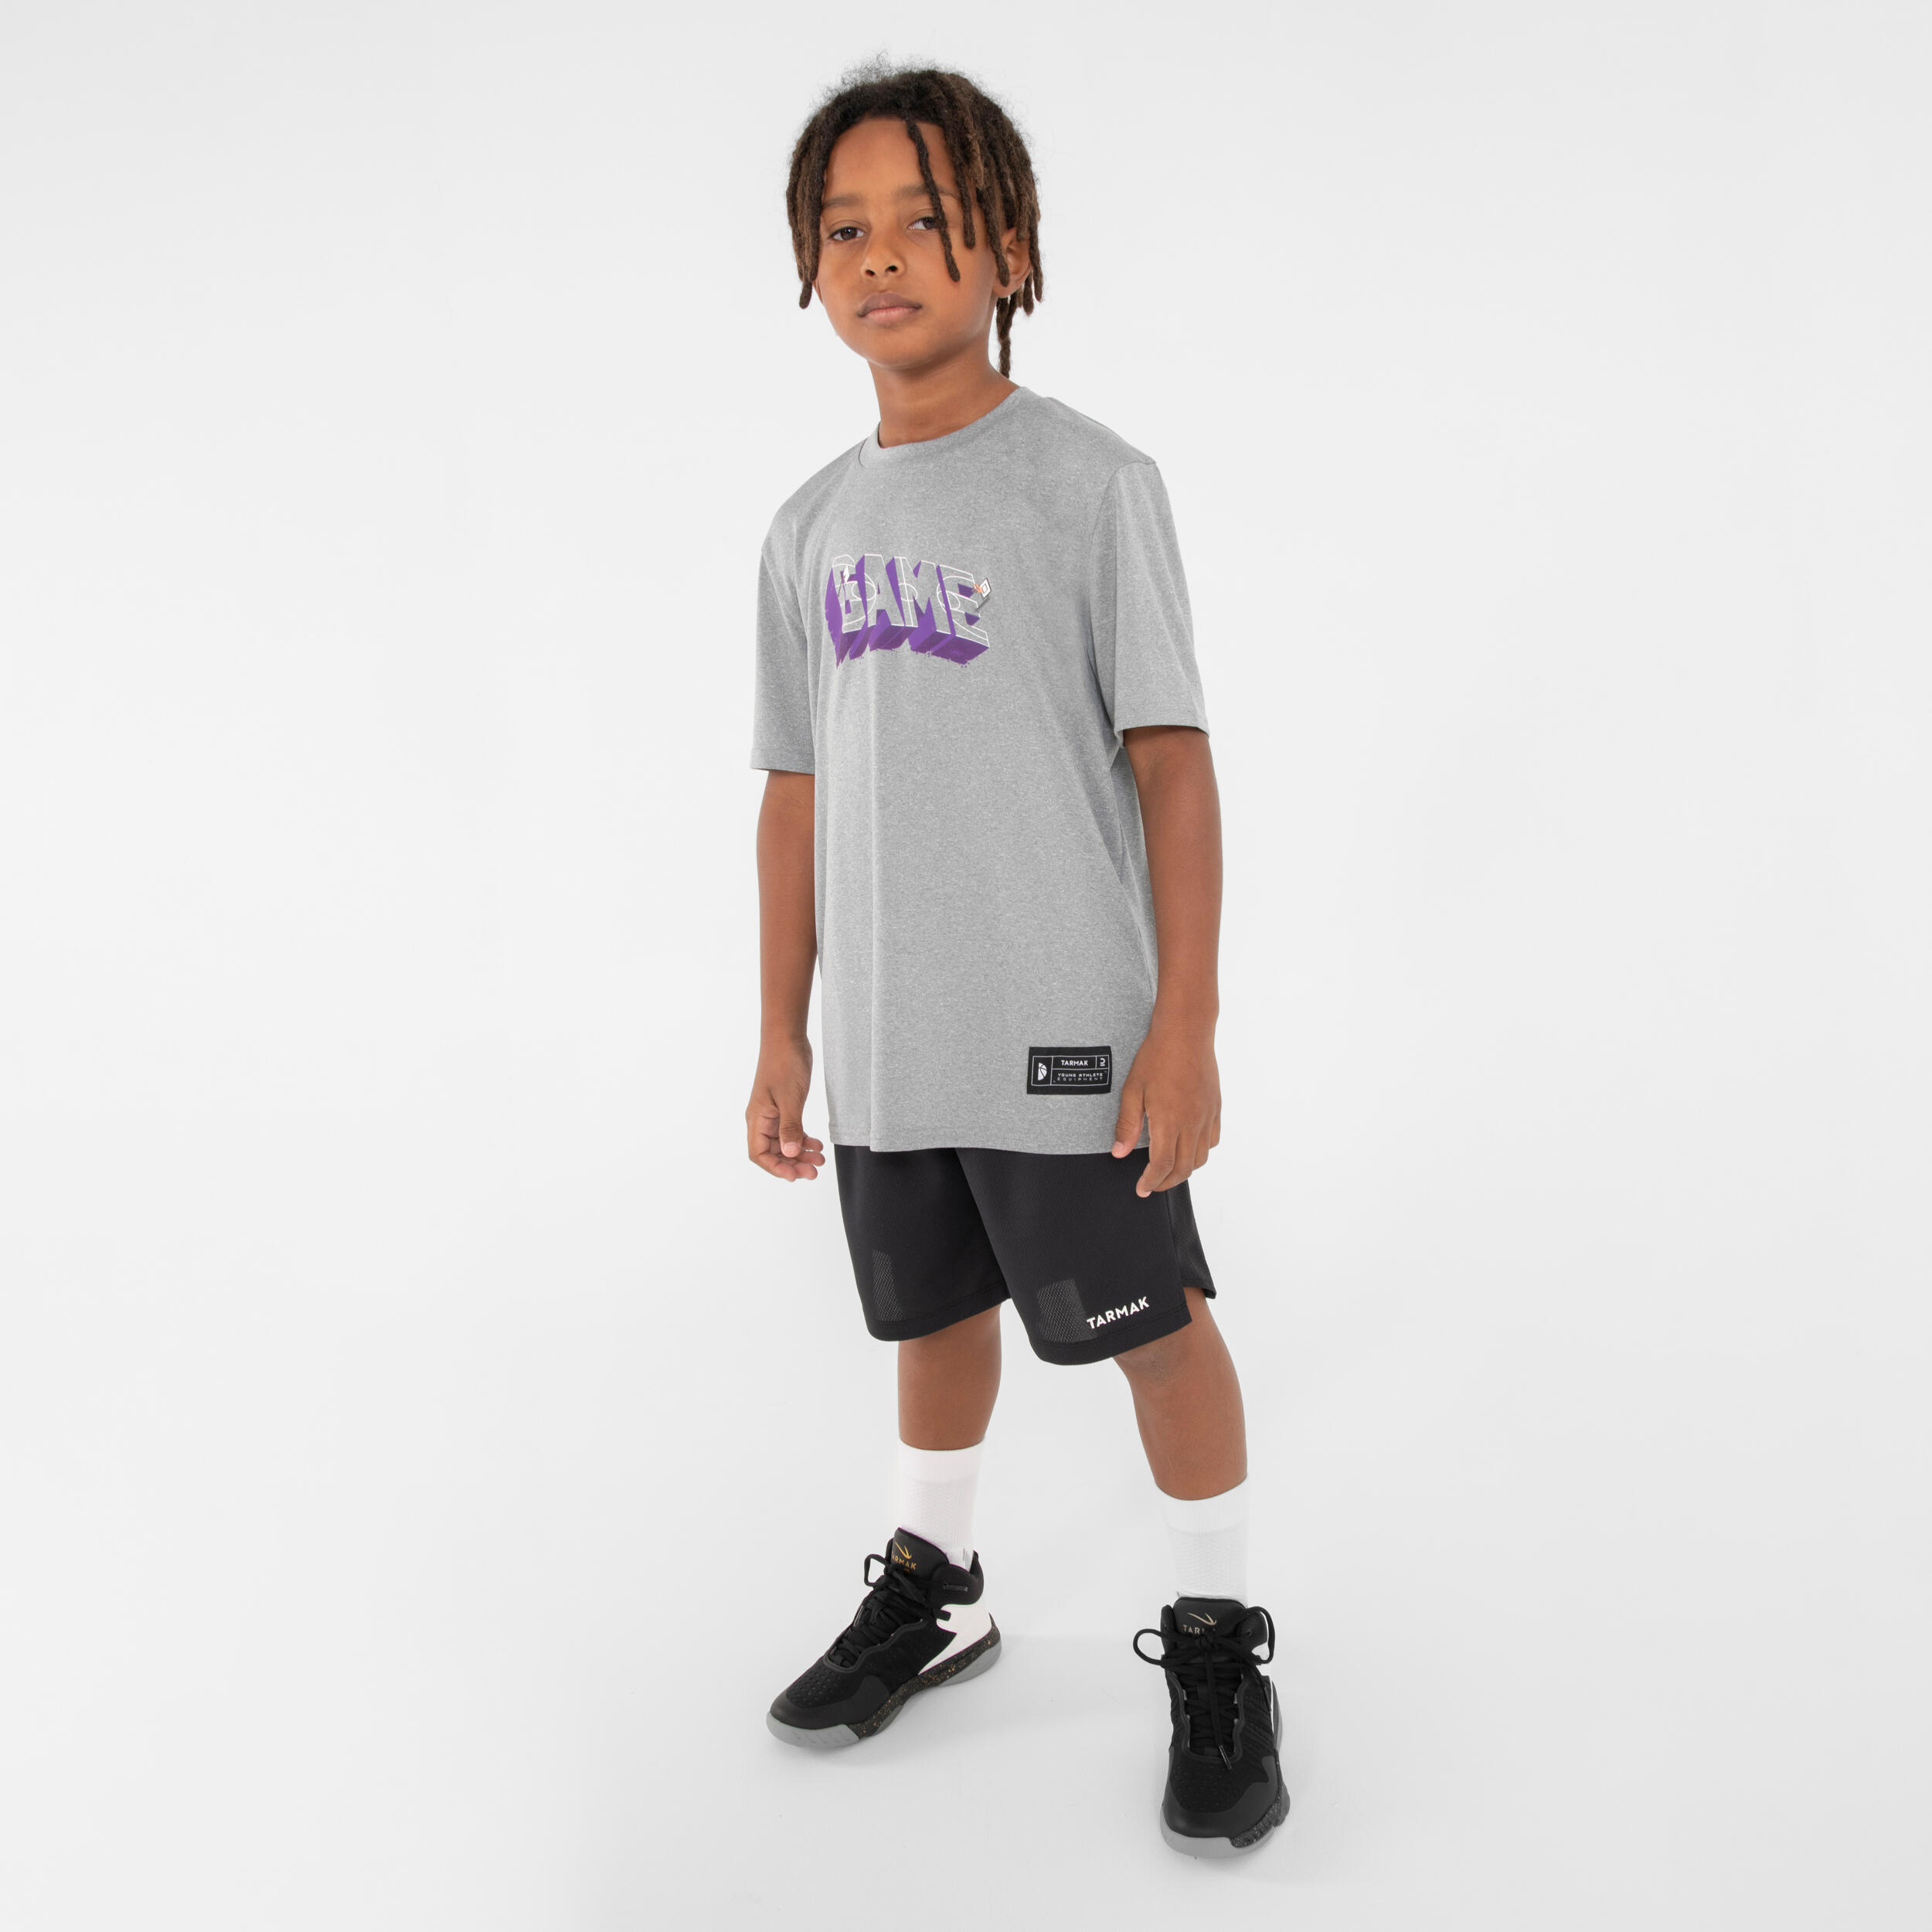 Kids' Intermediate Basketball Shoes SS500H - Black 6/16